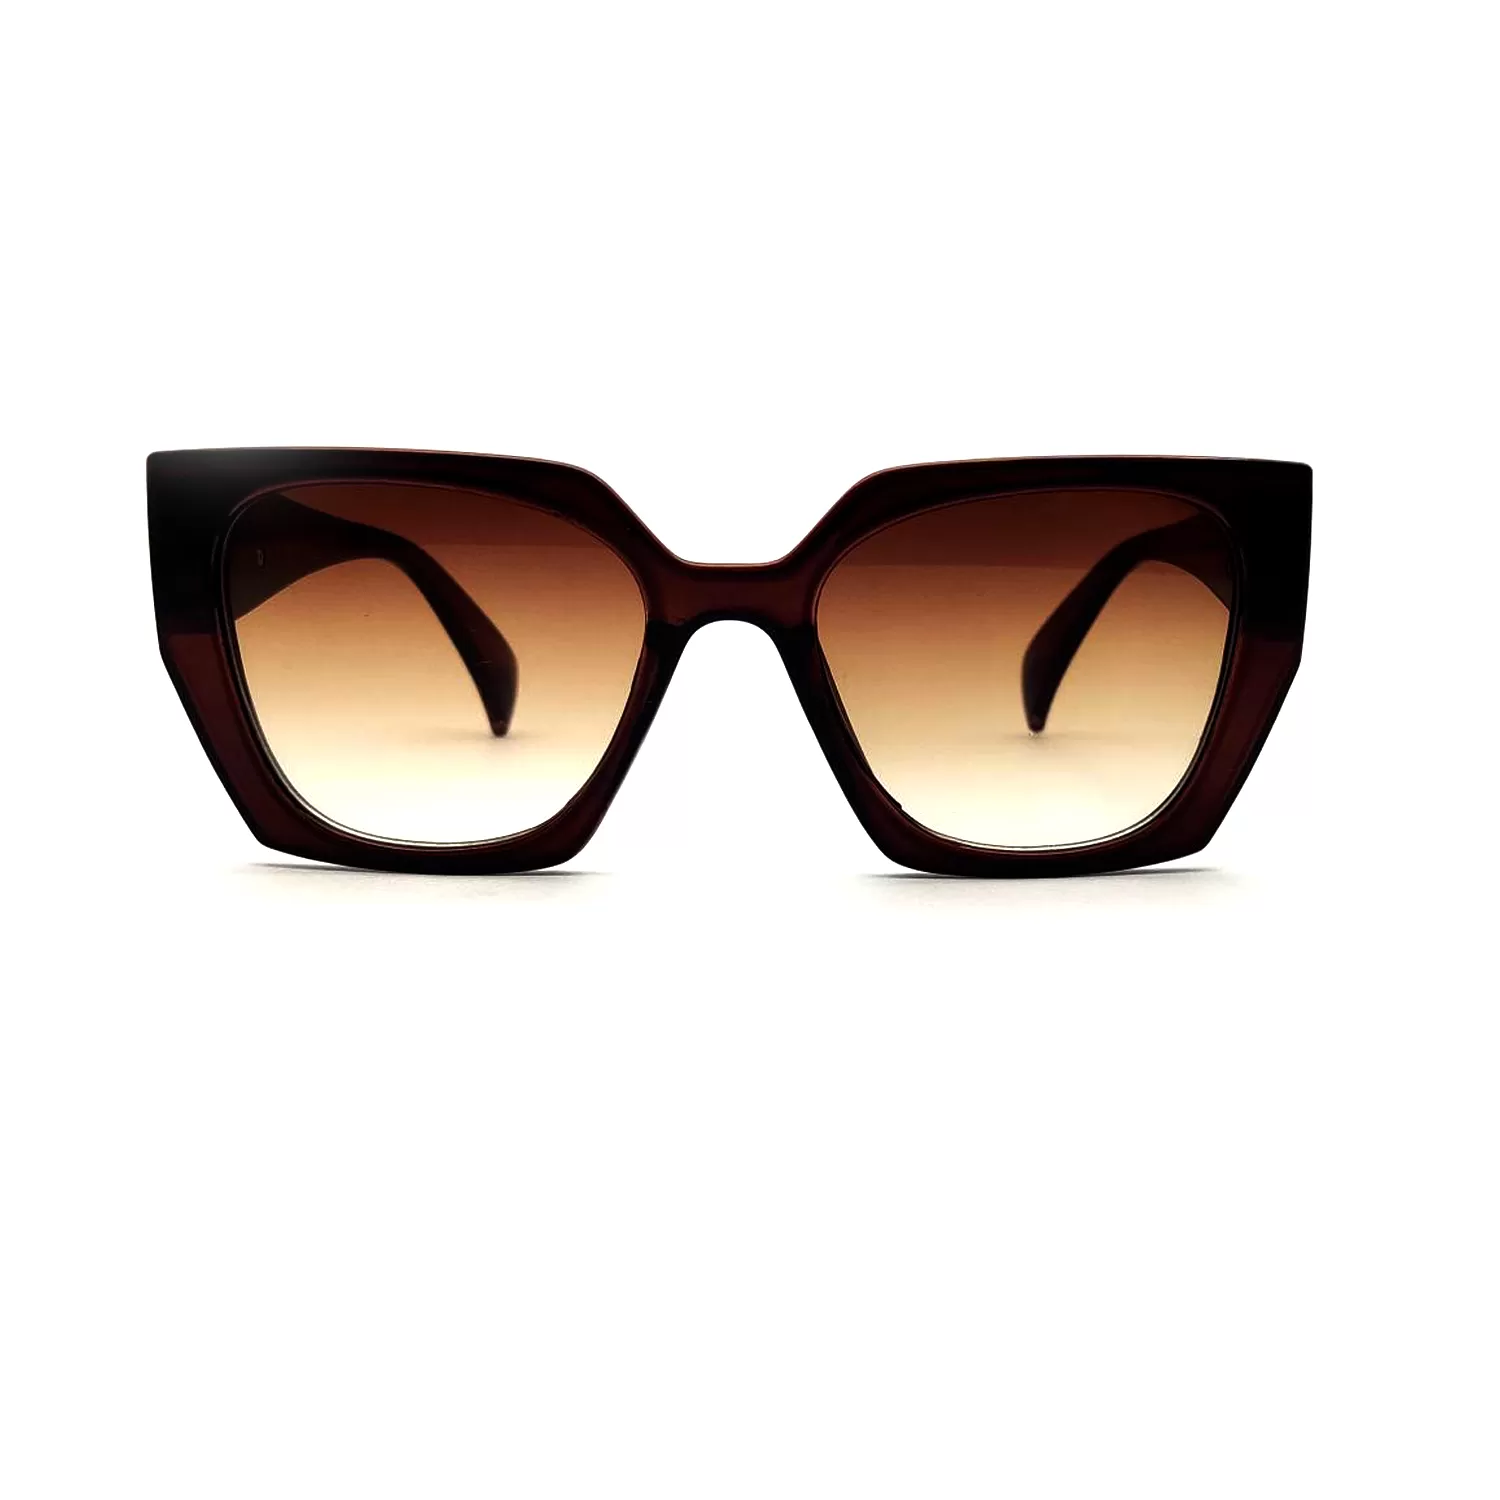 buy sunglasses online at chashmah.com